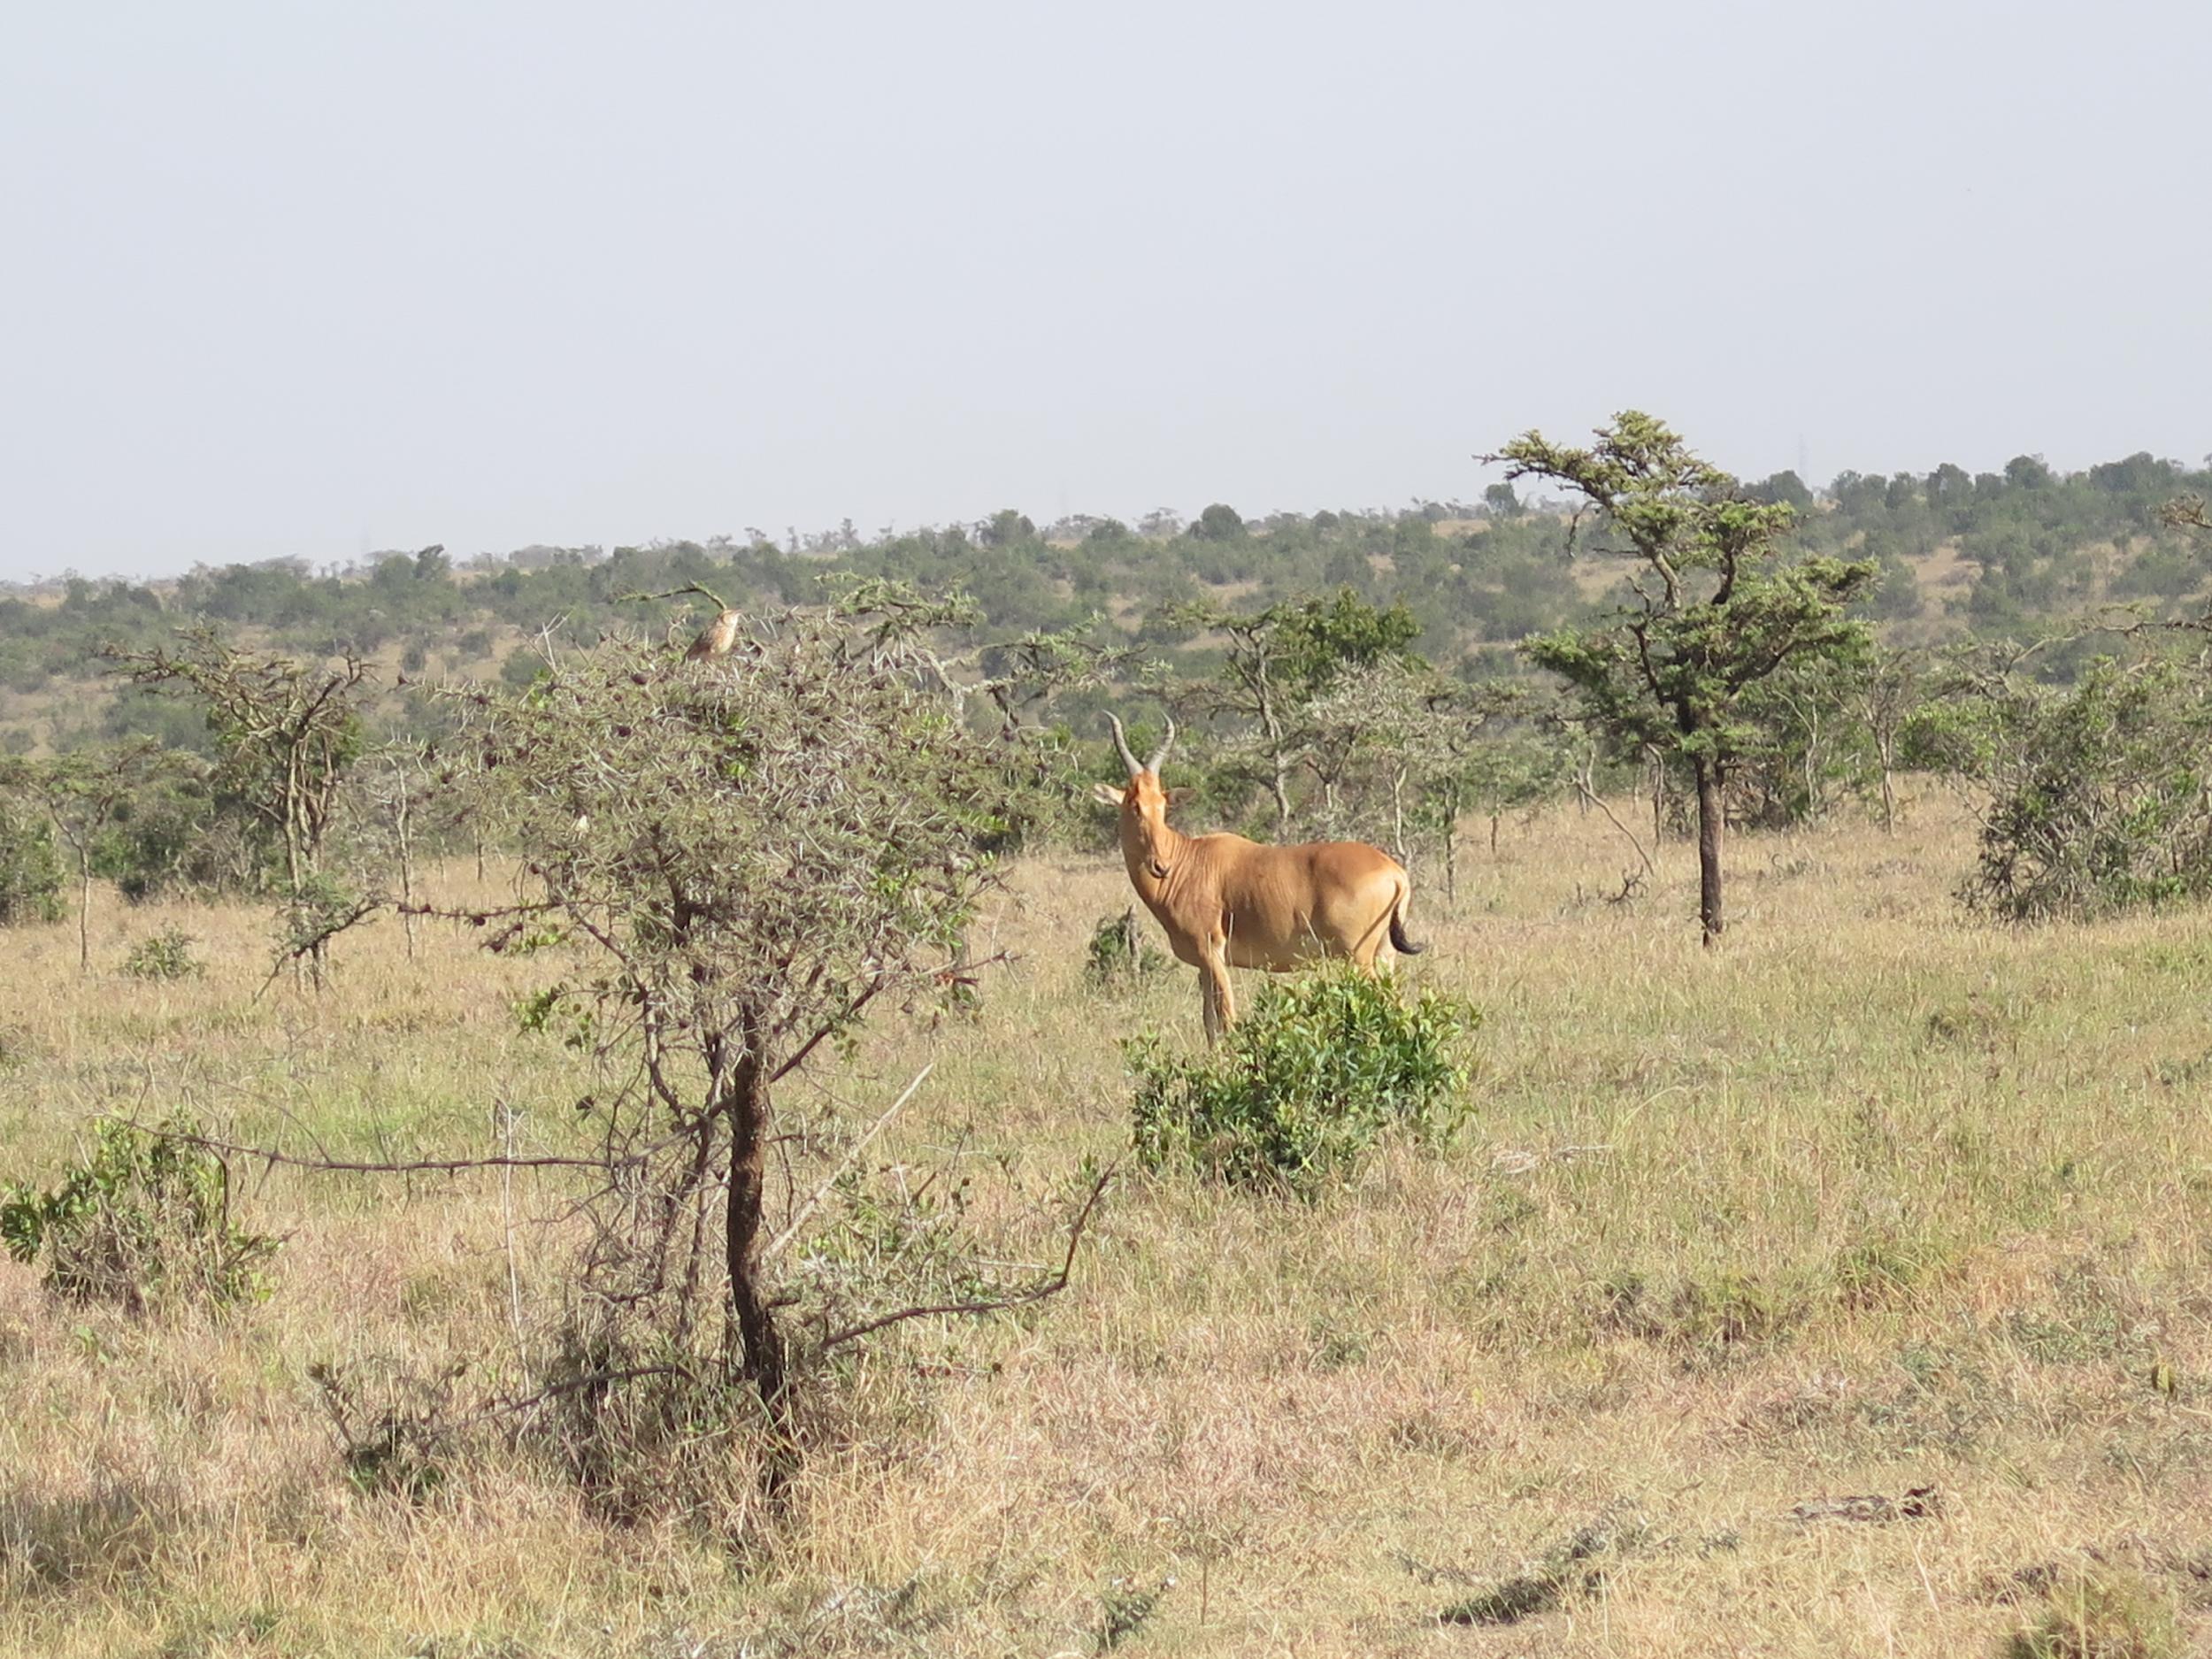 A lone Hartebeest at Olpejeta Conservancy in Laikipia, Kenya